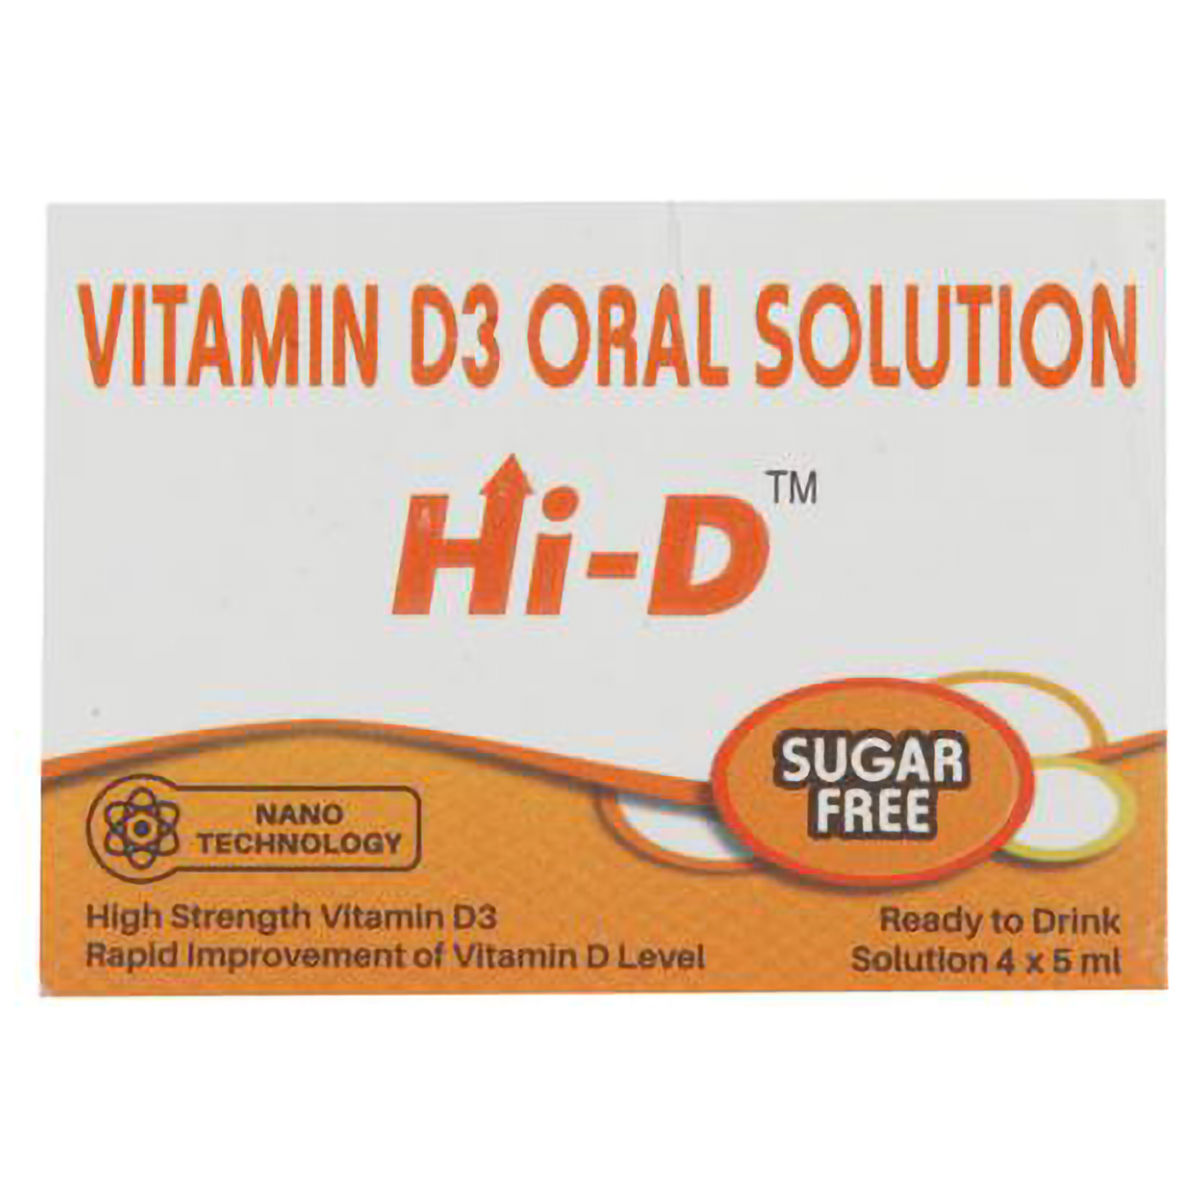 Hi-D 60K SF Solution 5 ml, Pack of 1 Liquid